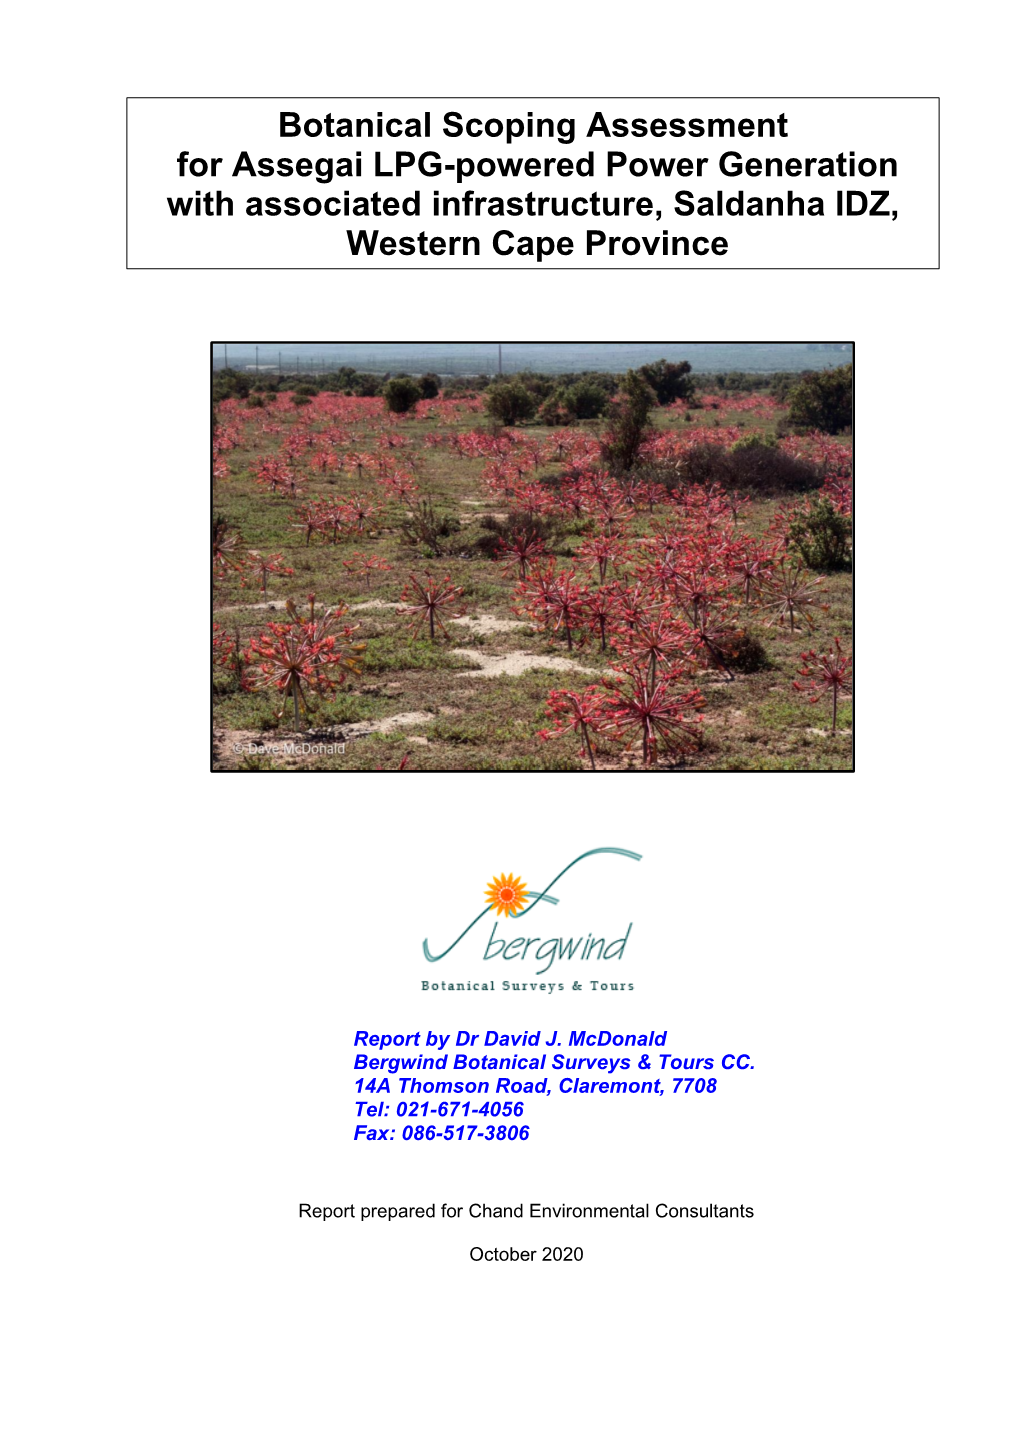 Botanical Scoping Assessment for Assegai LPG-Powered Power Generation with Associated Infrastructure, Saldanha IDZ, Western Cape Province